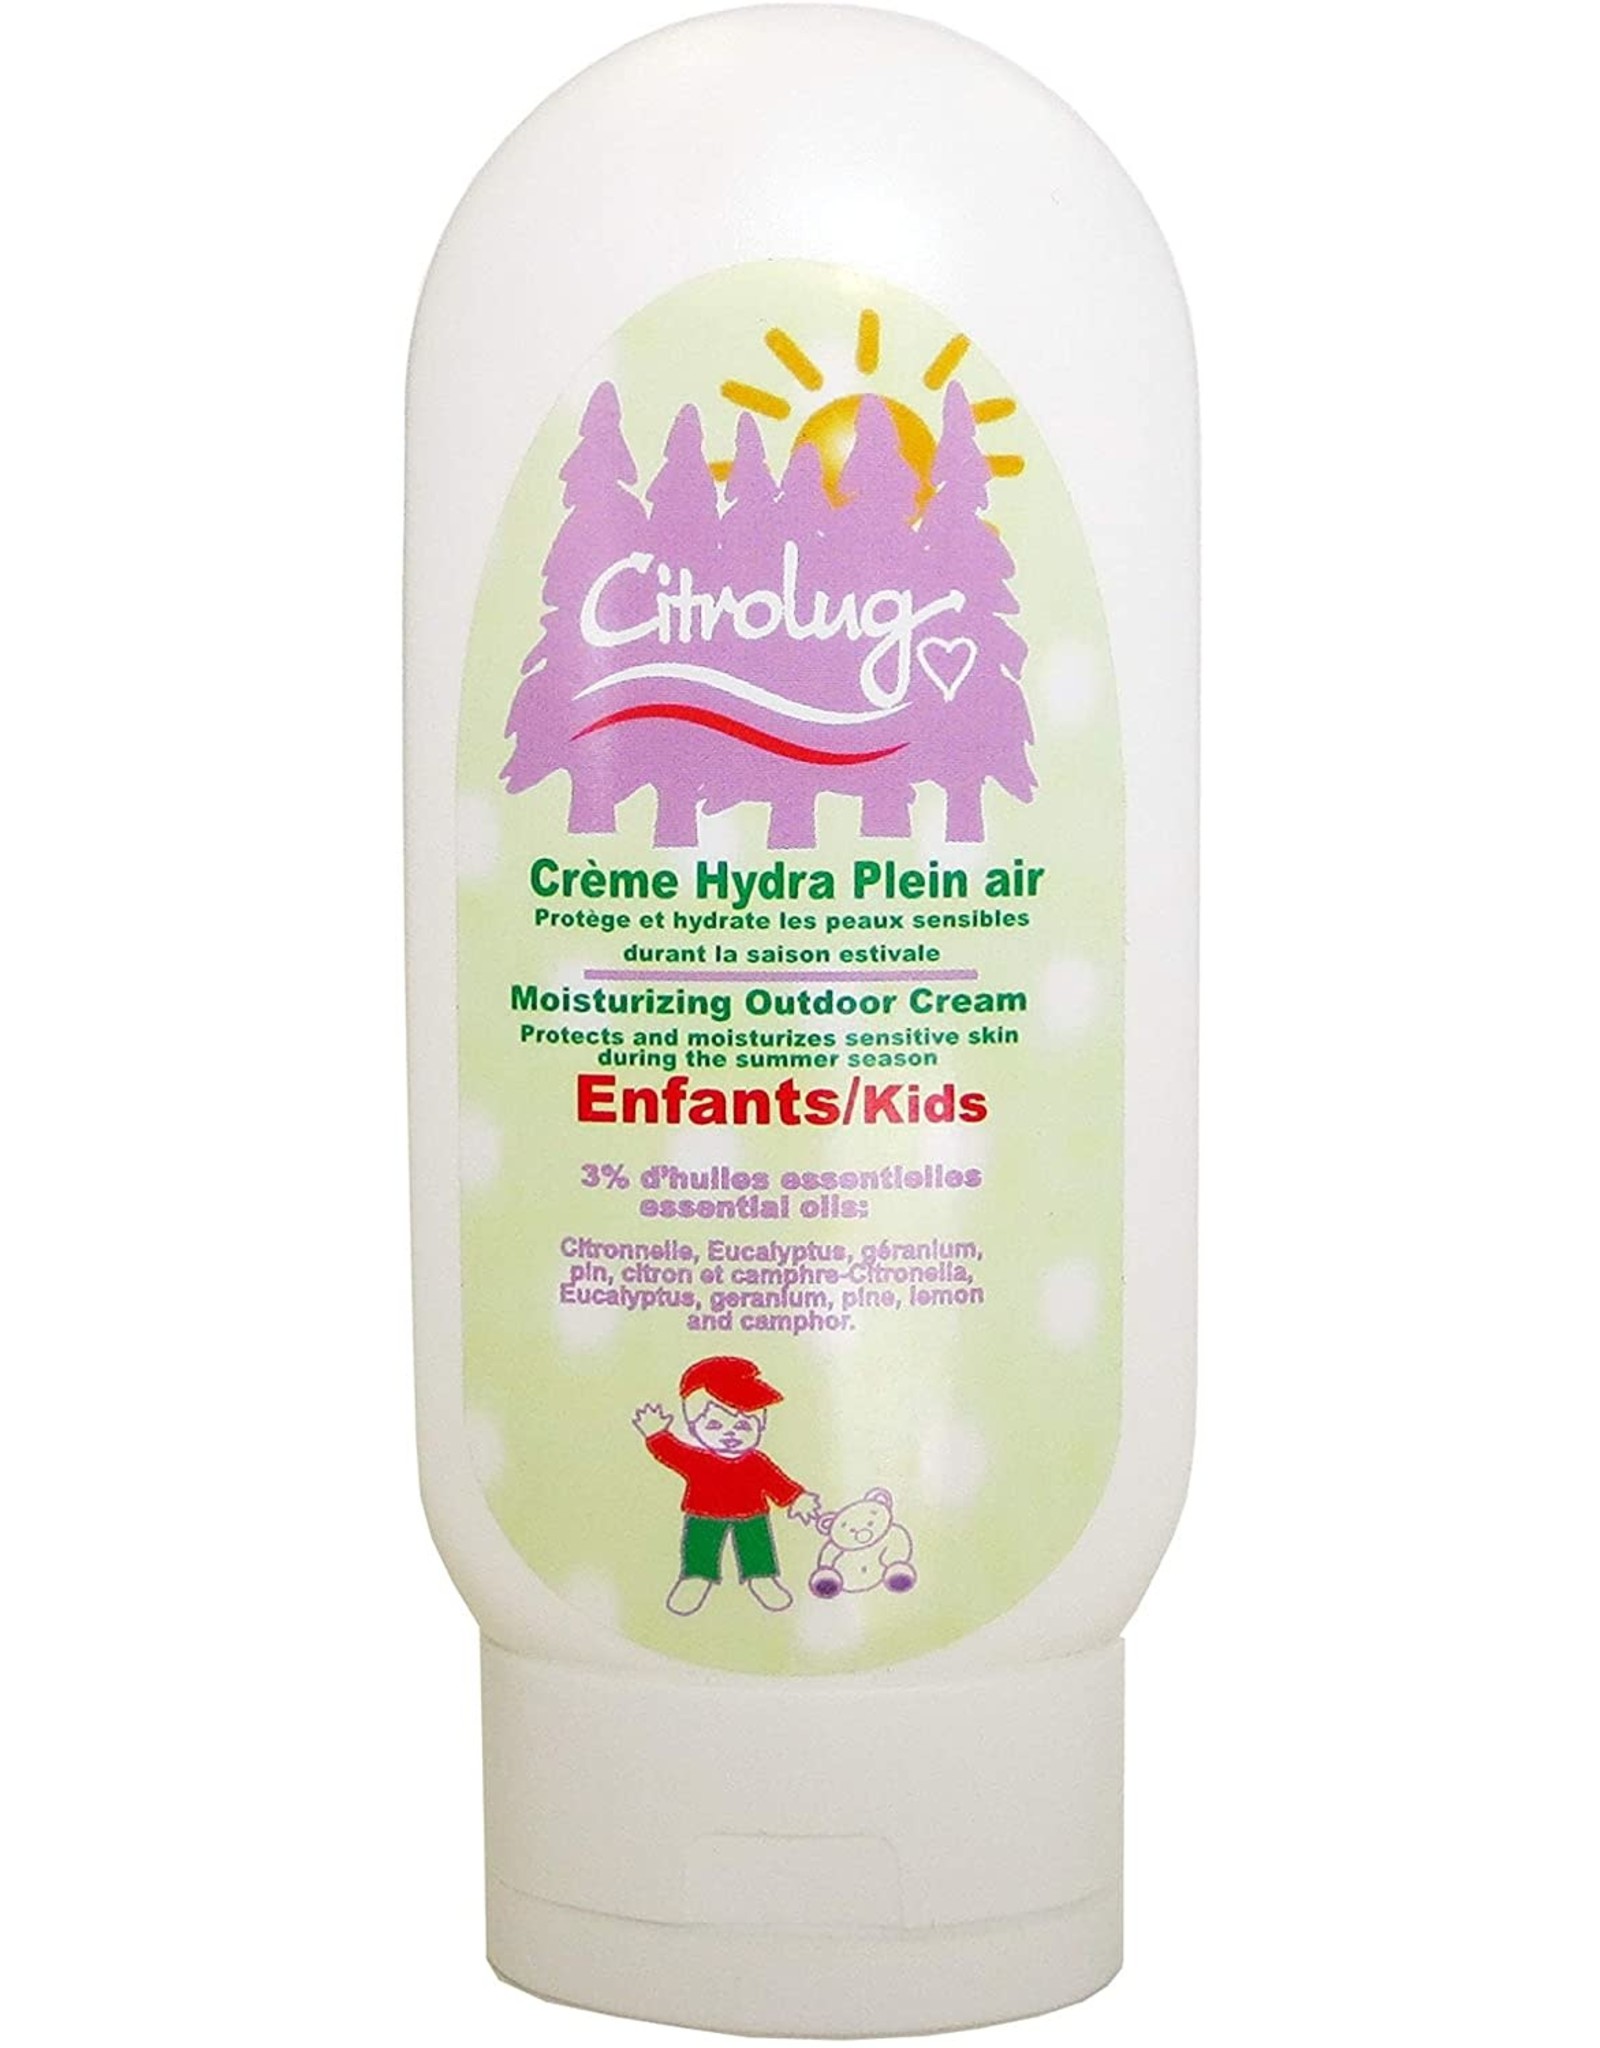 Citrolug Moisturizing Outdoor Cream for Kids